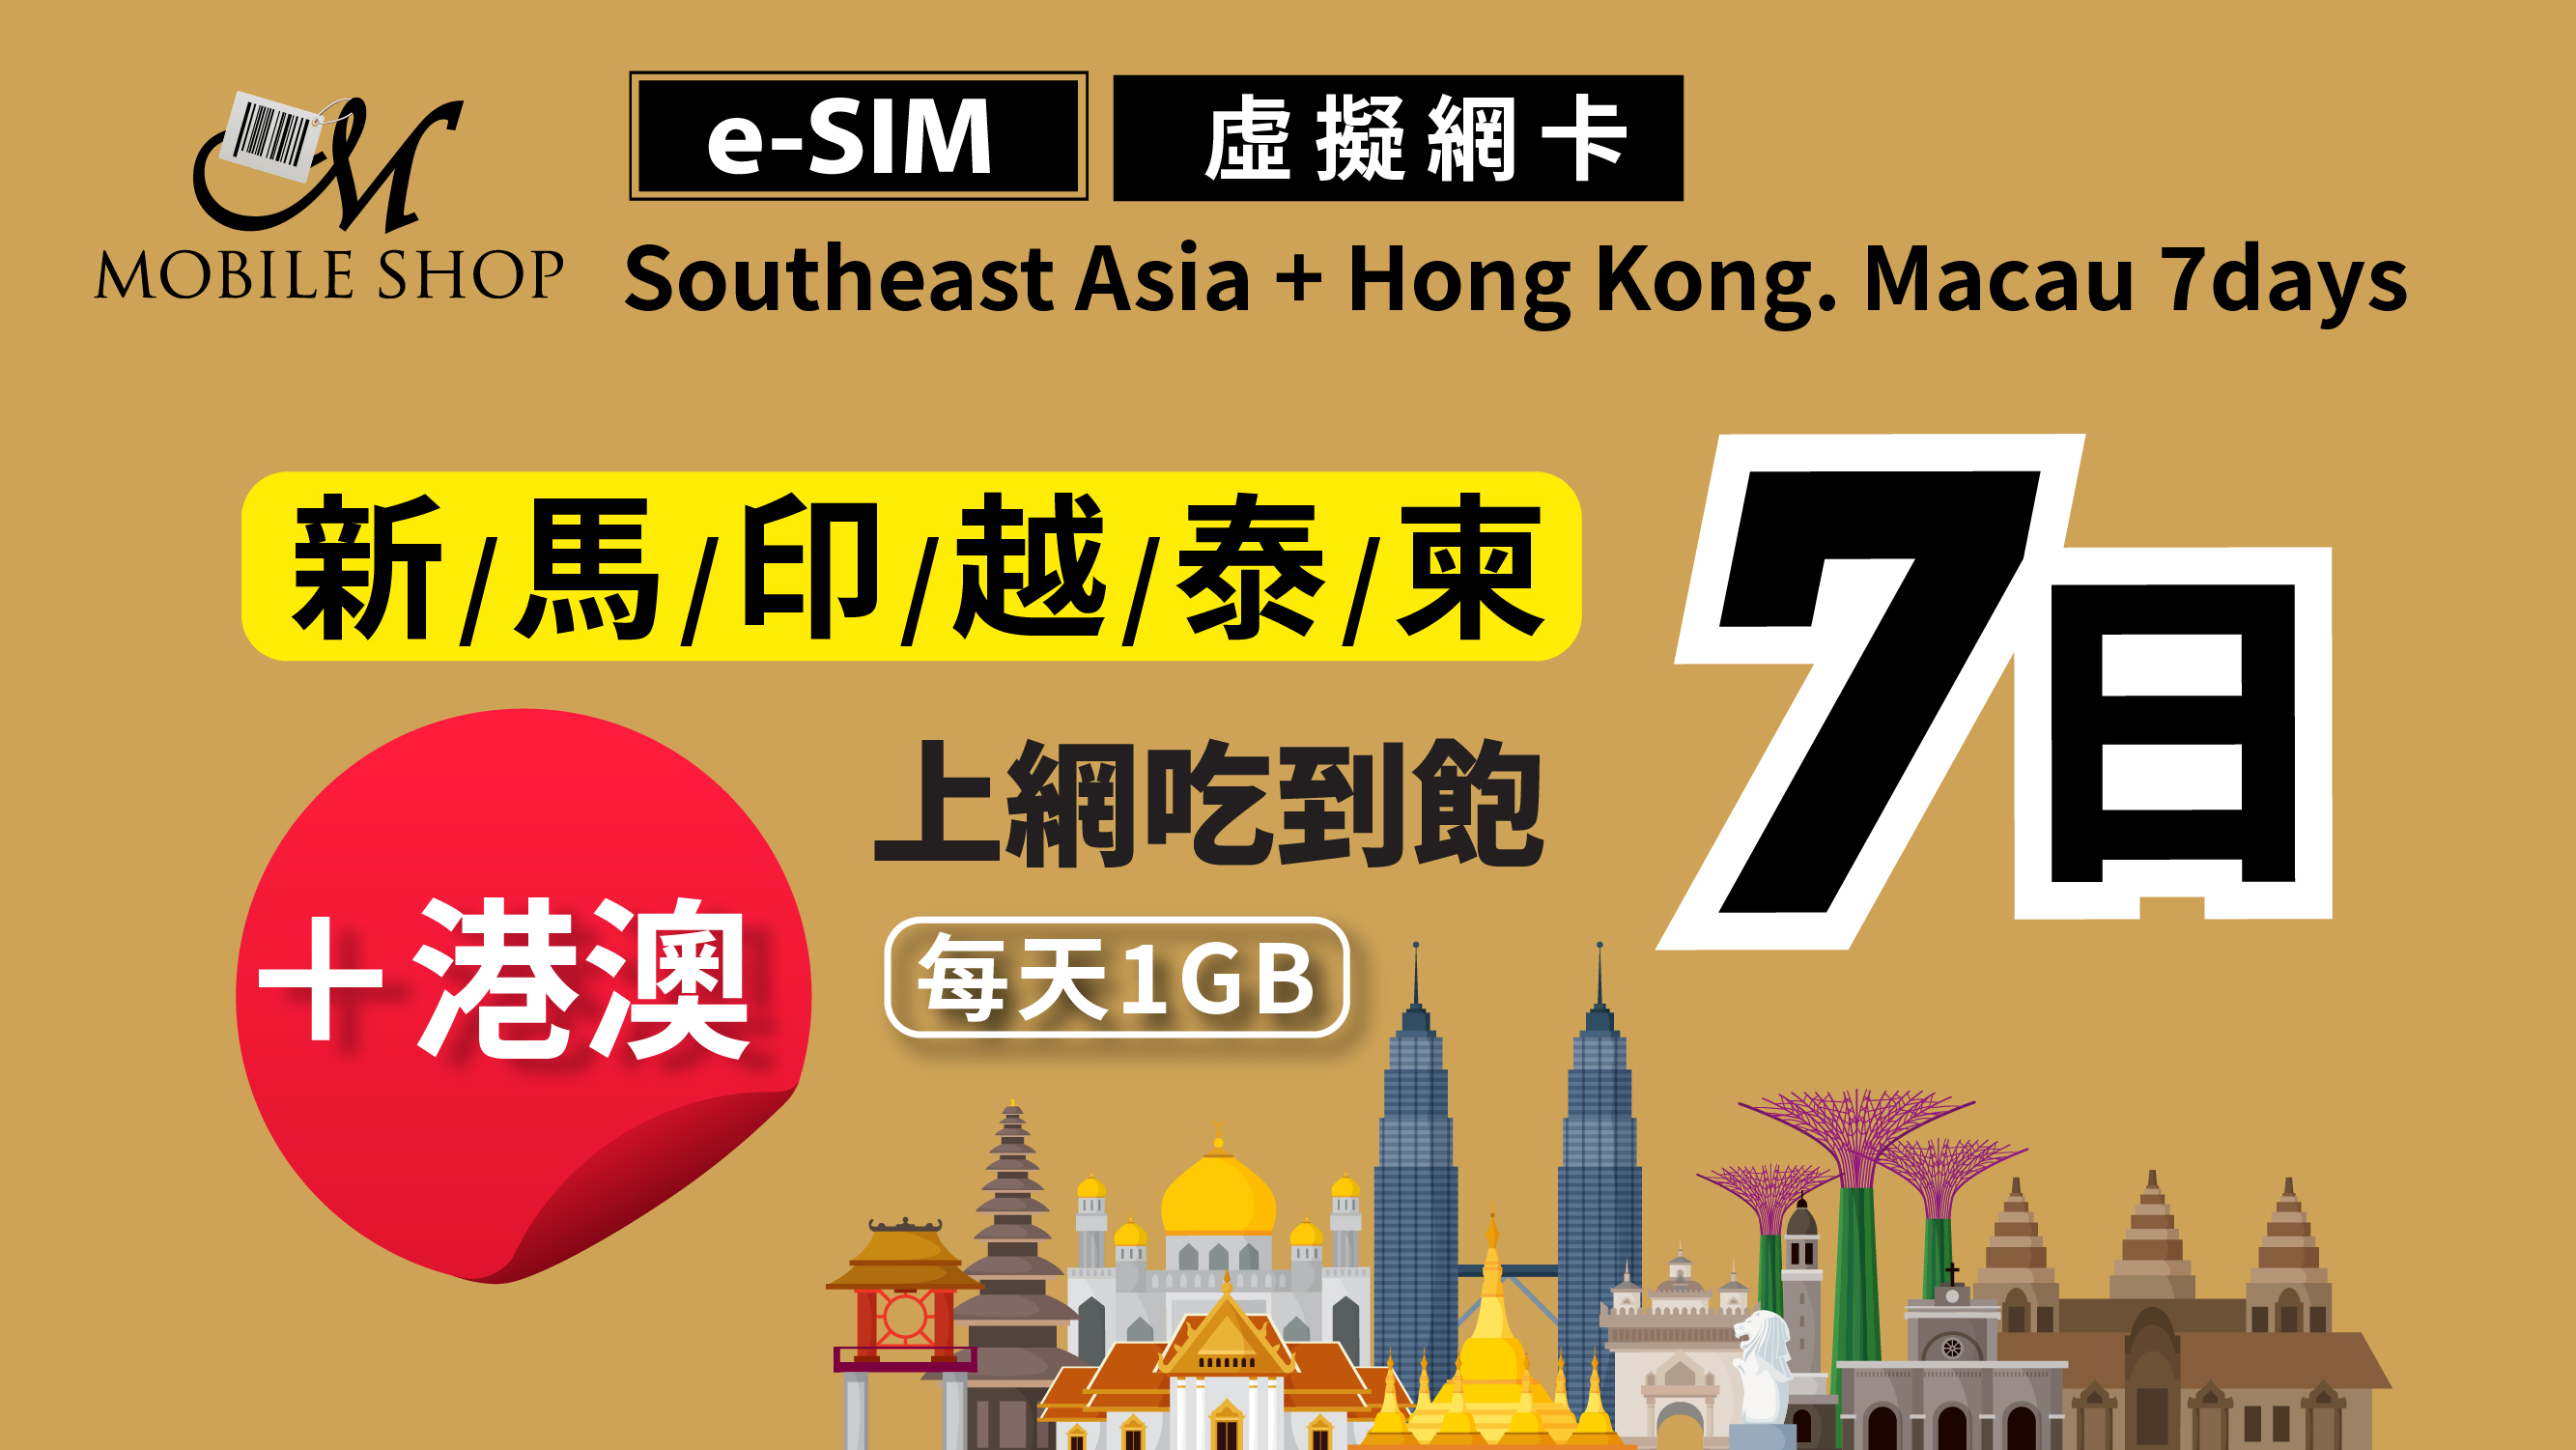 eSIM Southeast Asia+ Hong Kong. Macau 7days/1GB day unlimited data